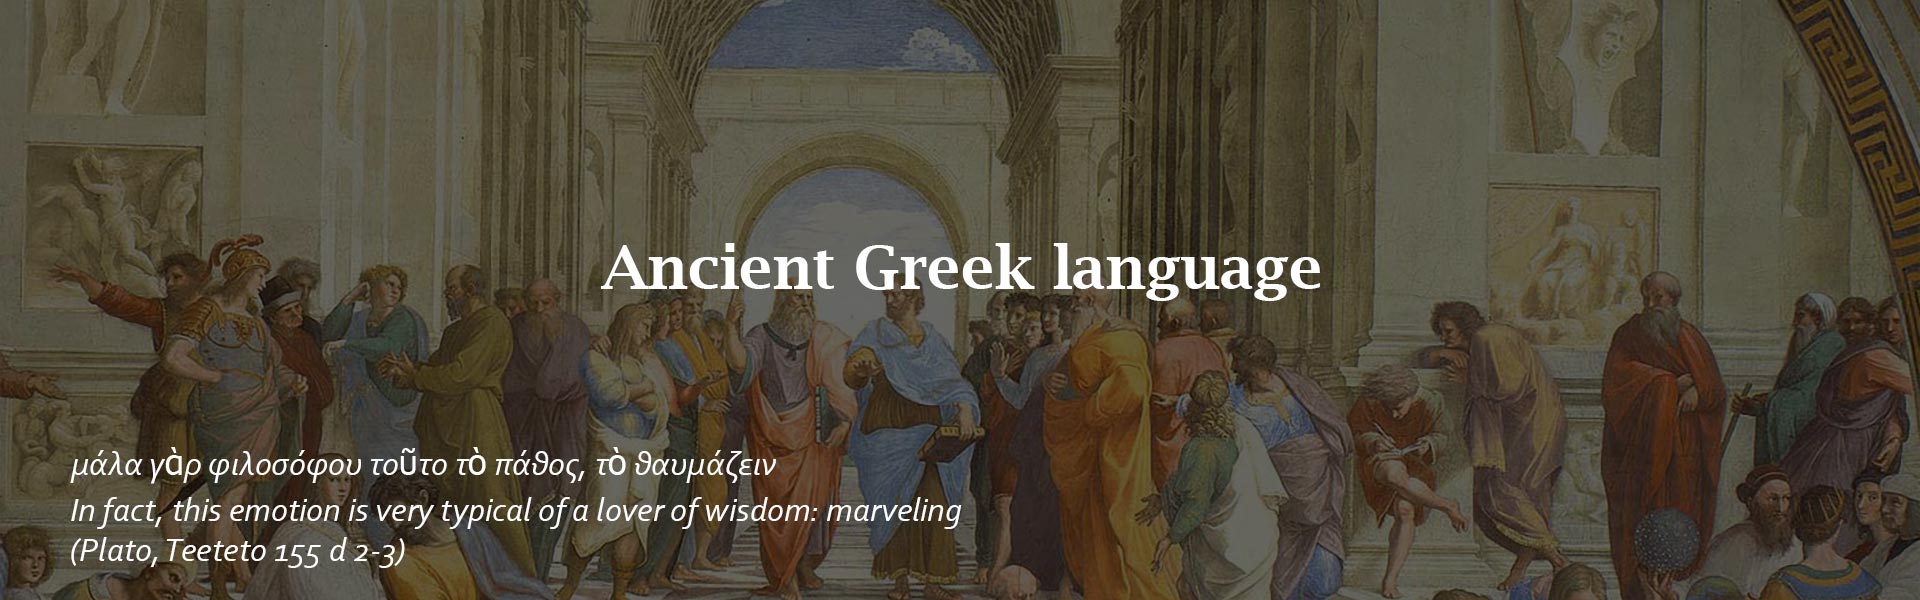 Ancient-Greek-language-alif